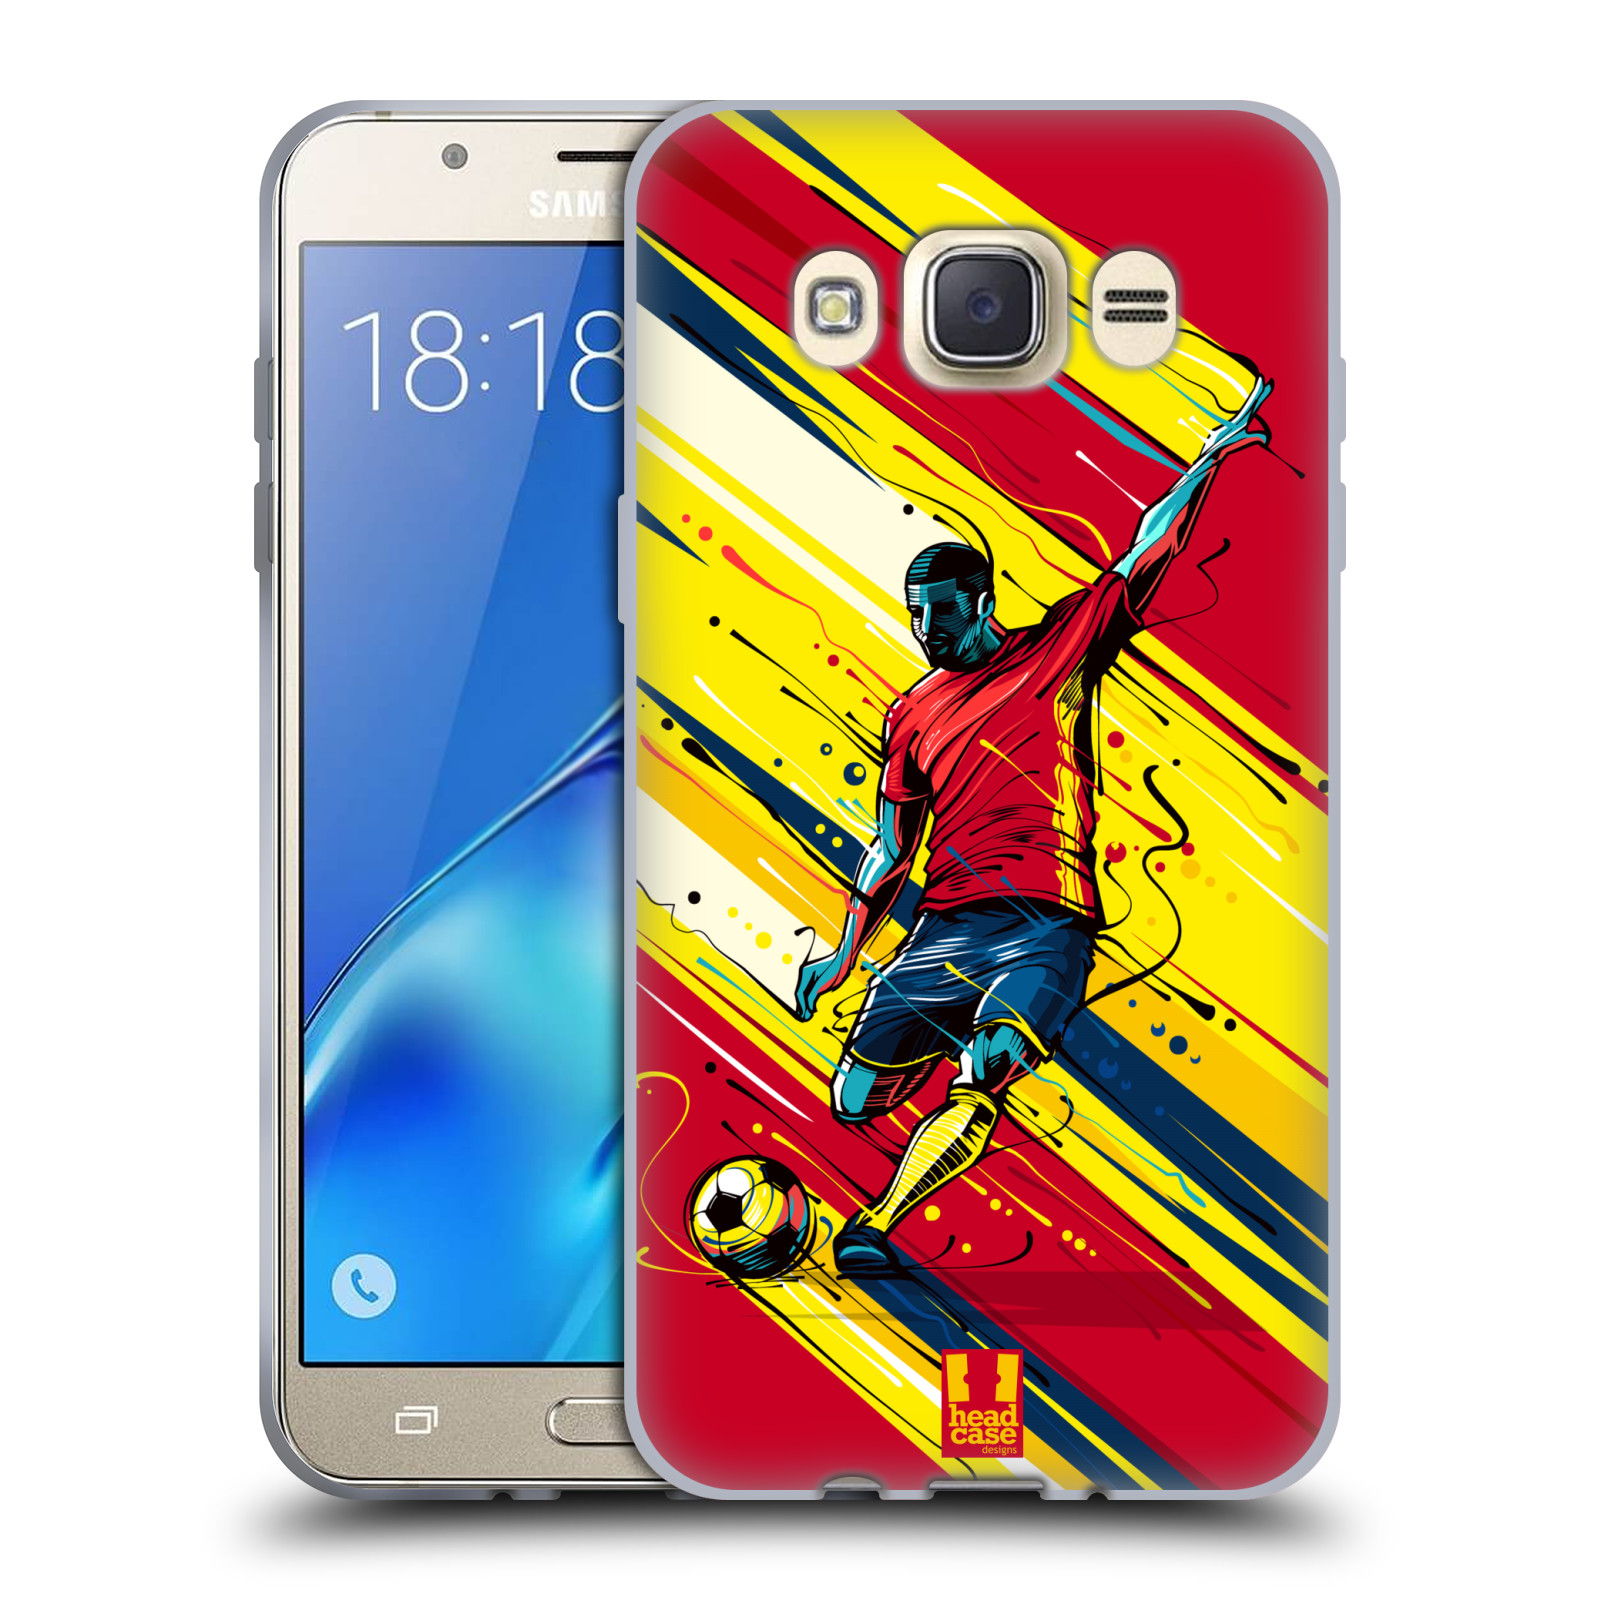 HEAD CASE silikonový obal na mobil Samsung Galaxy J7 2016 Sport fotbal střela do brány